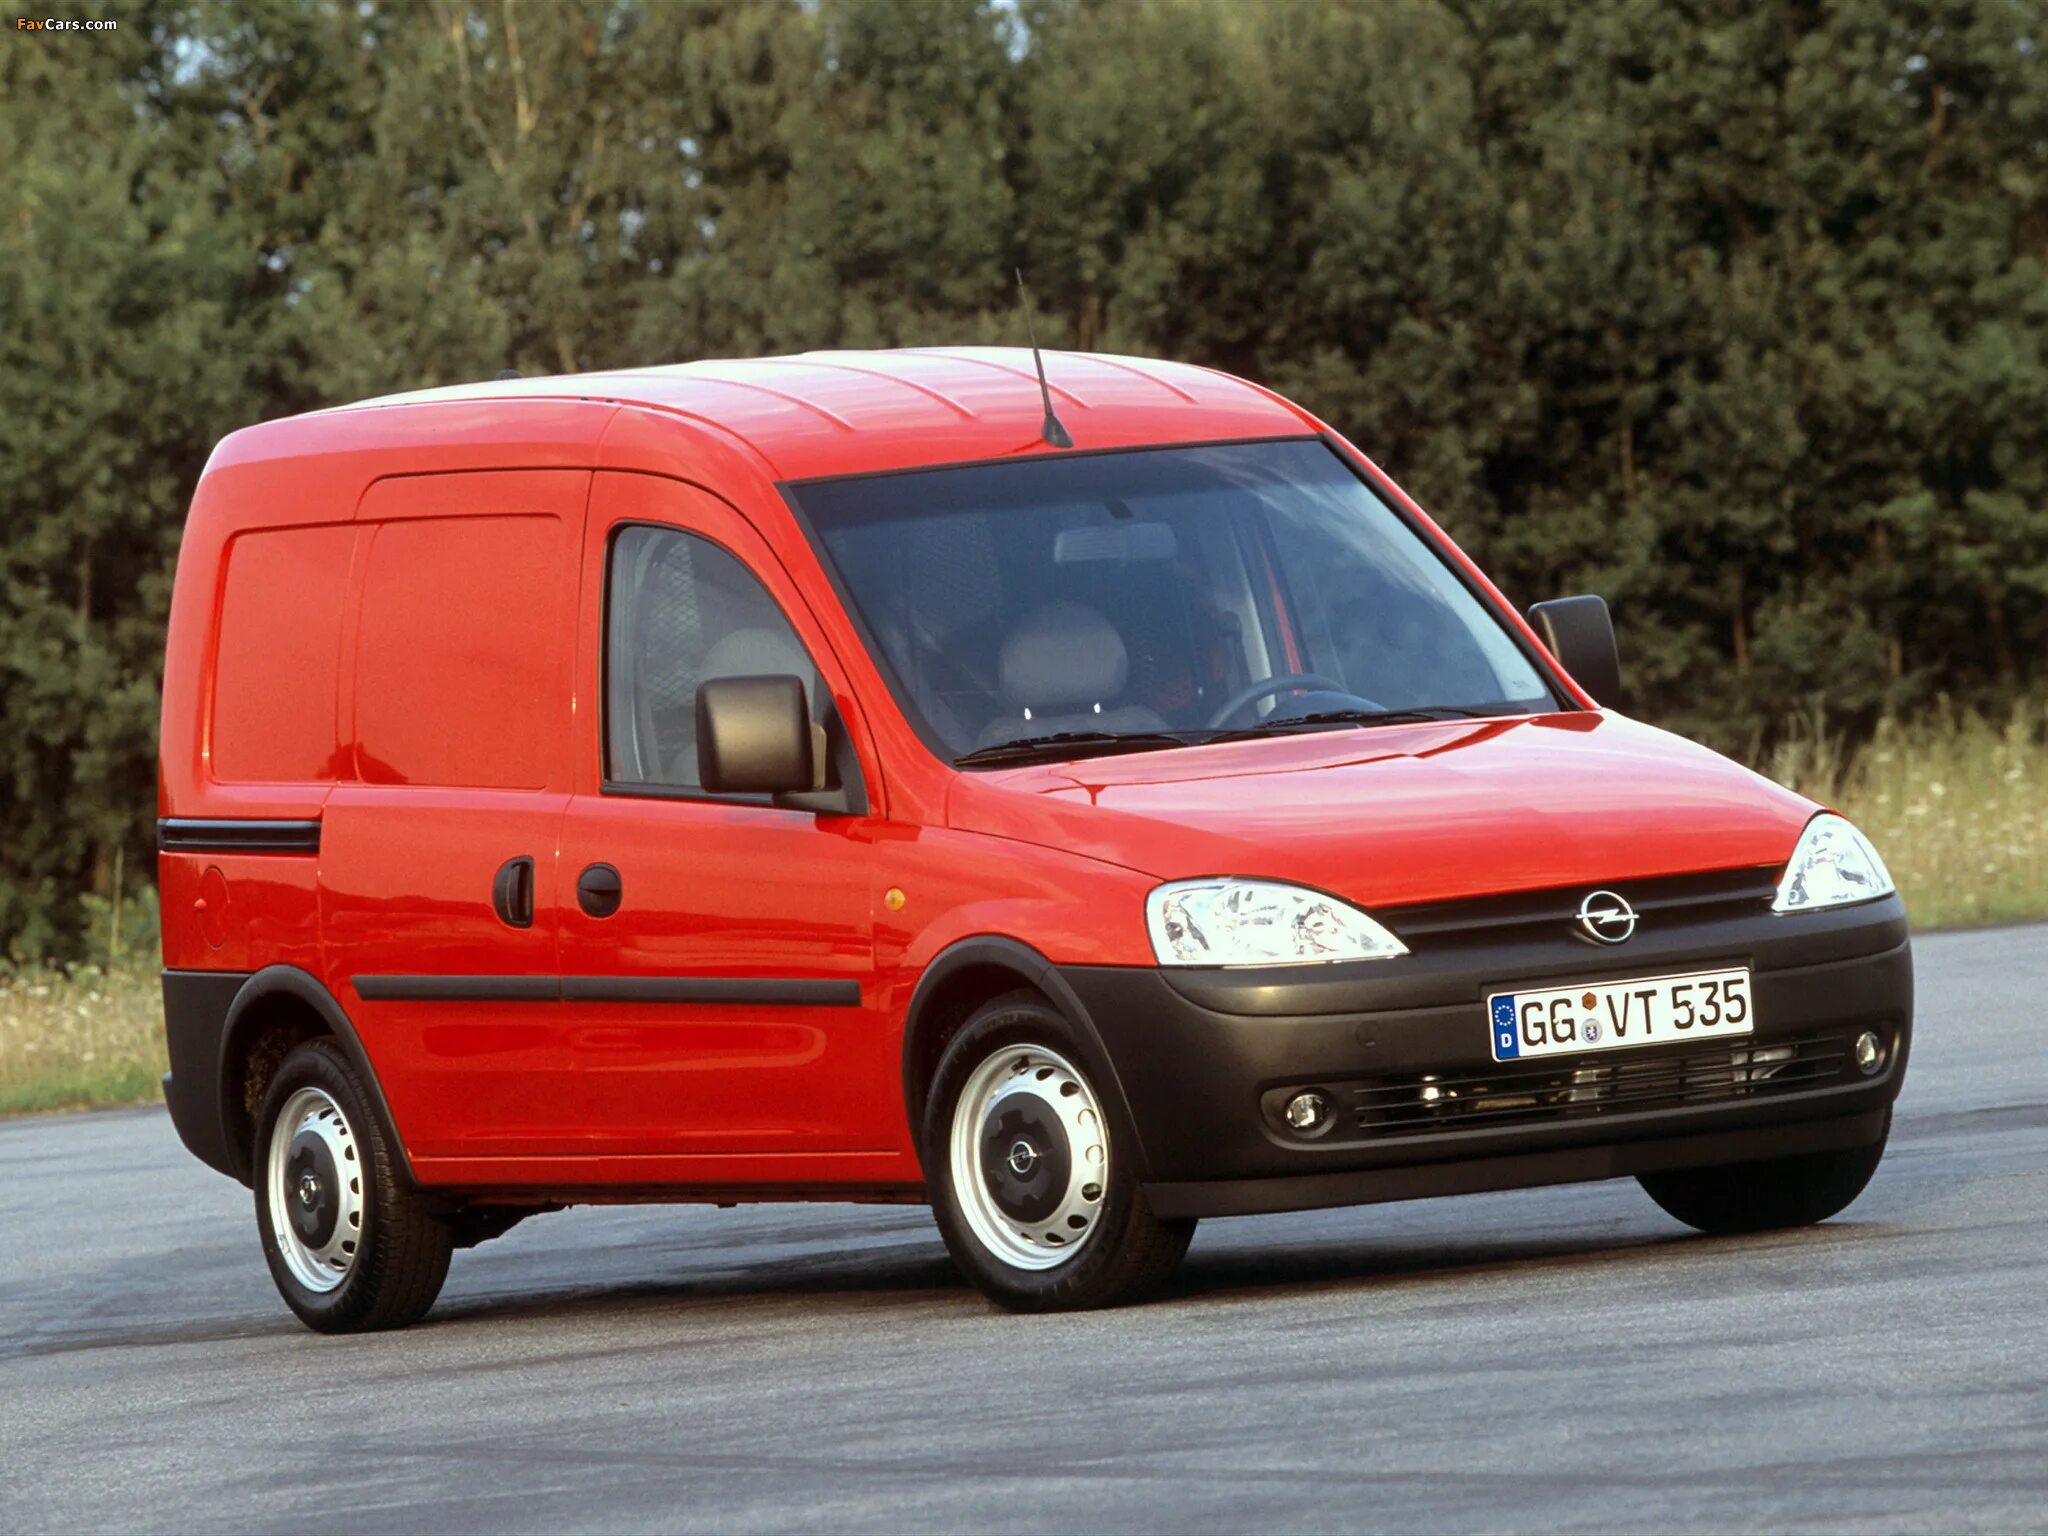 Опель комбо 1. Opel Combo 2001. Opel Combo 2002. Combo c 2001 Opel. Opel Combo c 2001 фургон.